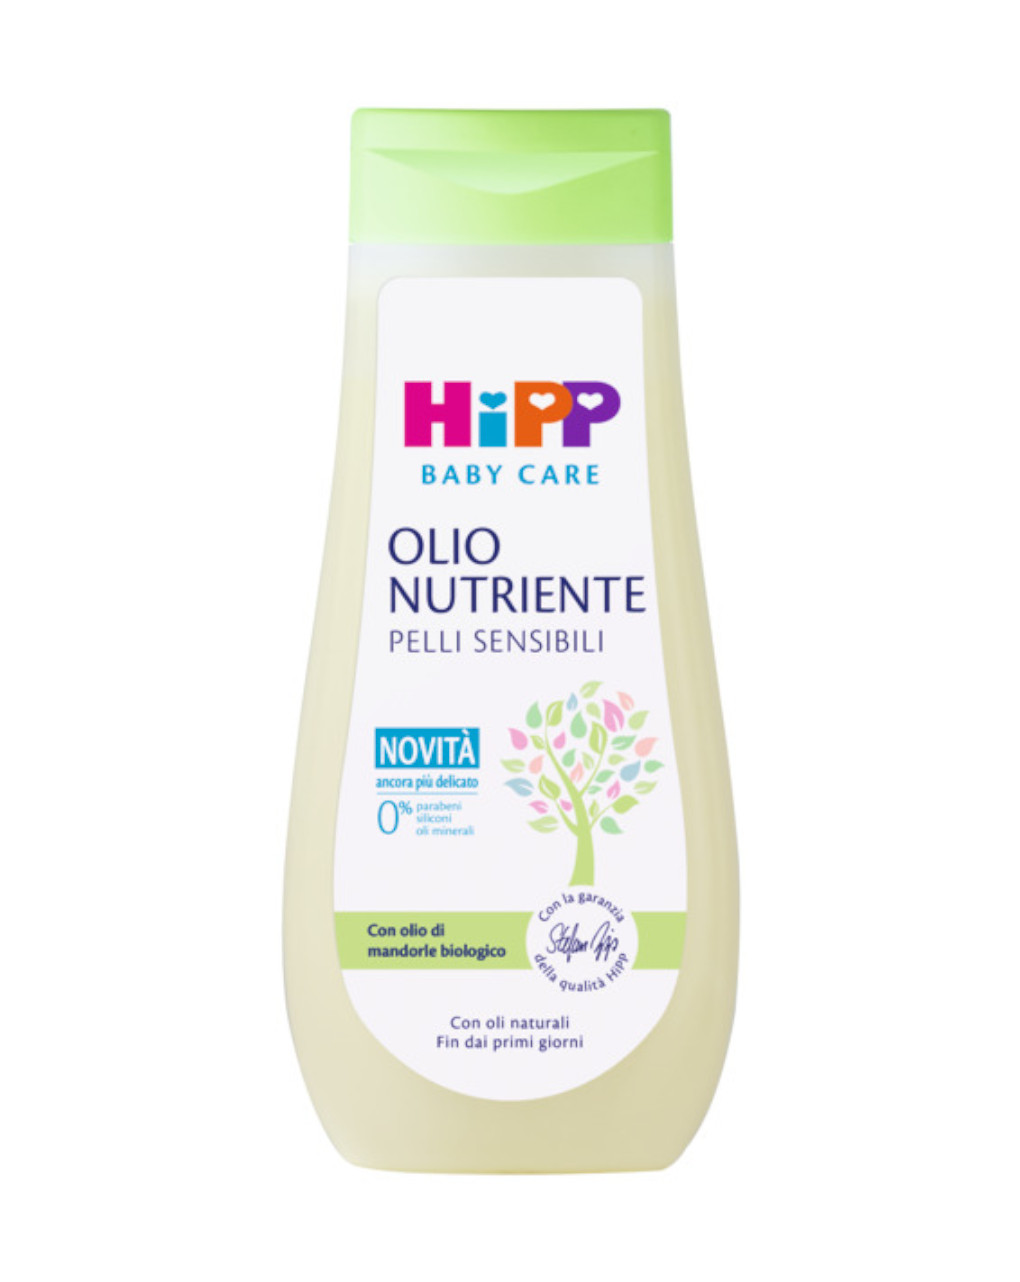 Olio nutriente 200ml - hipp - Hipp Baby